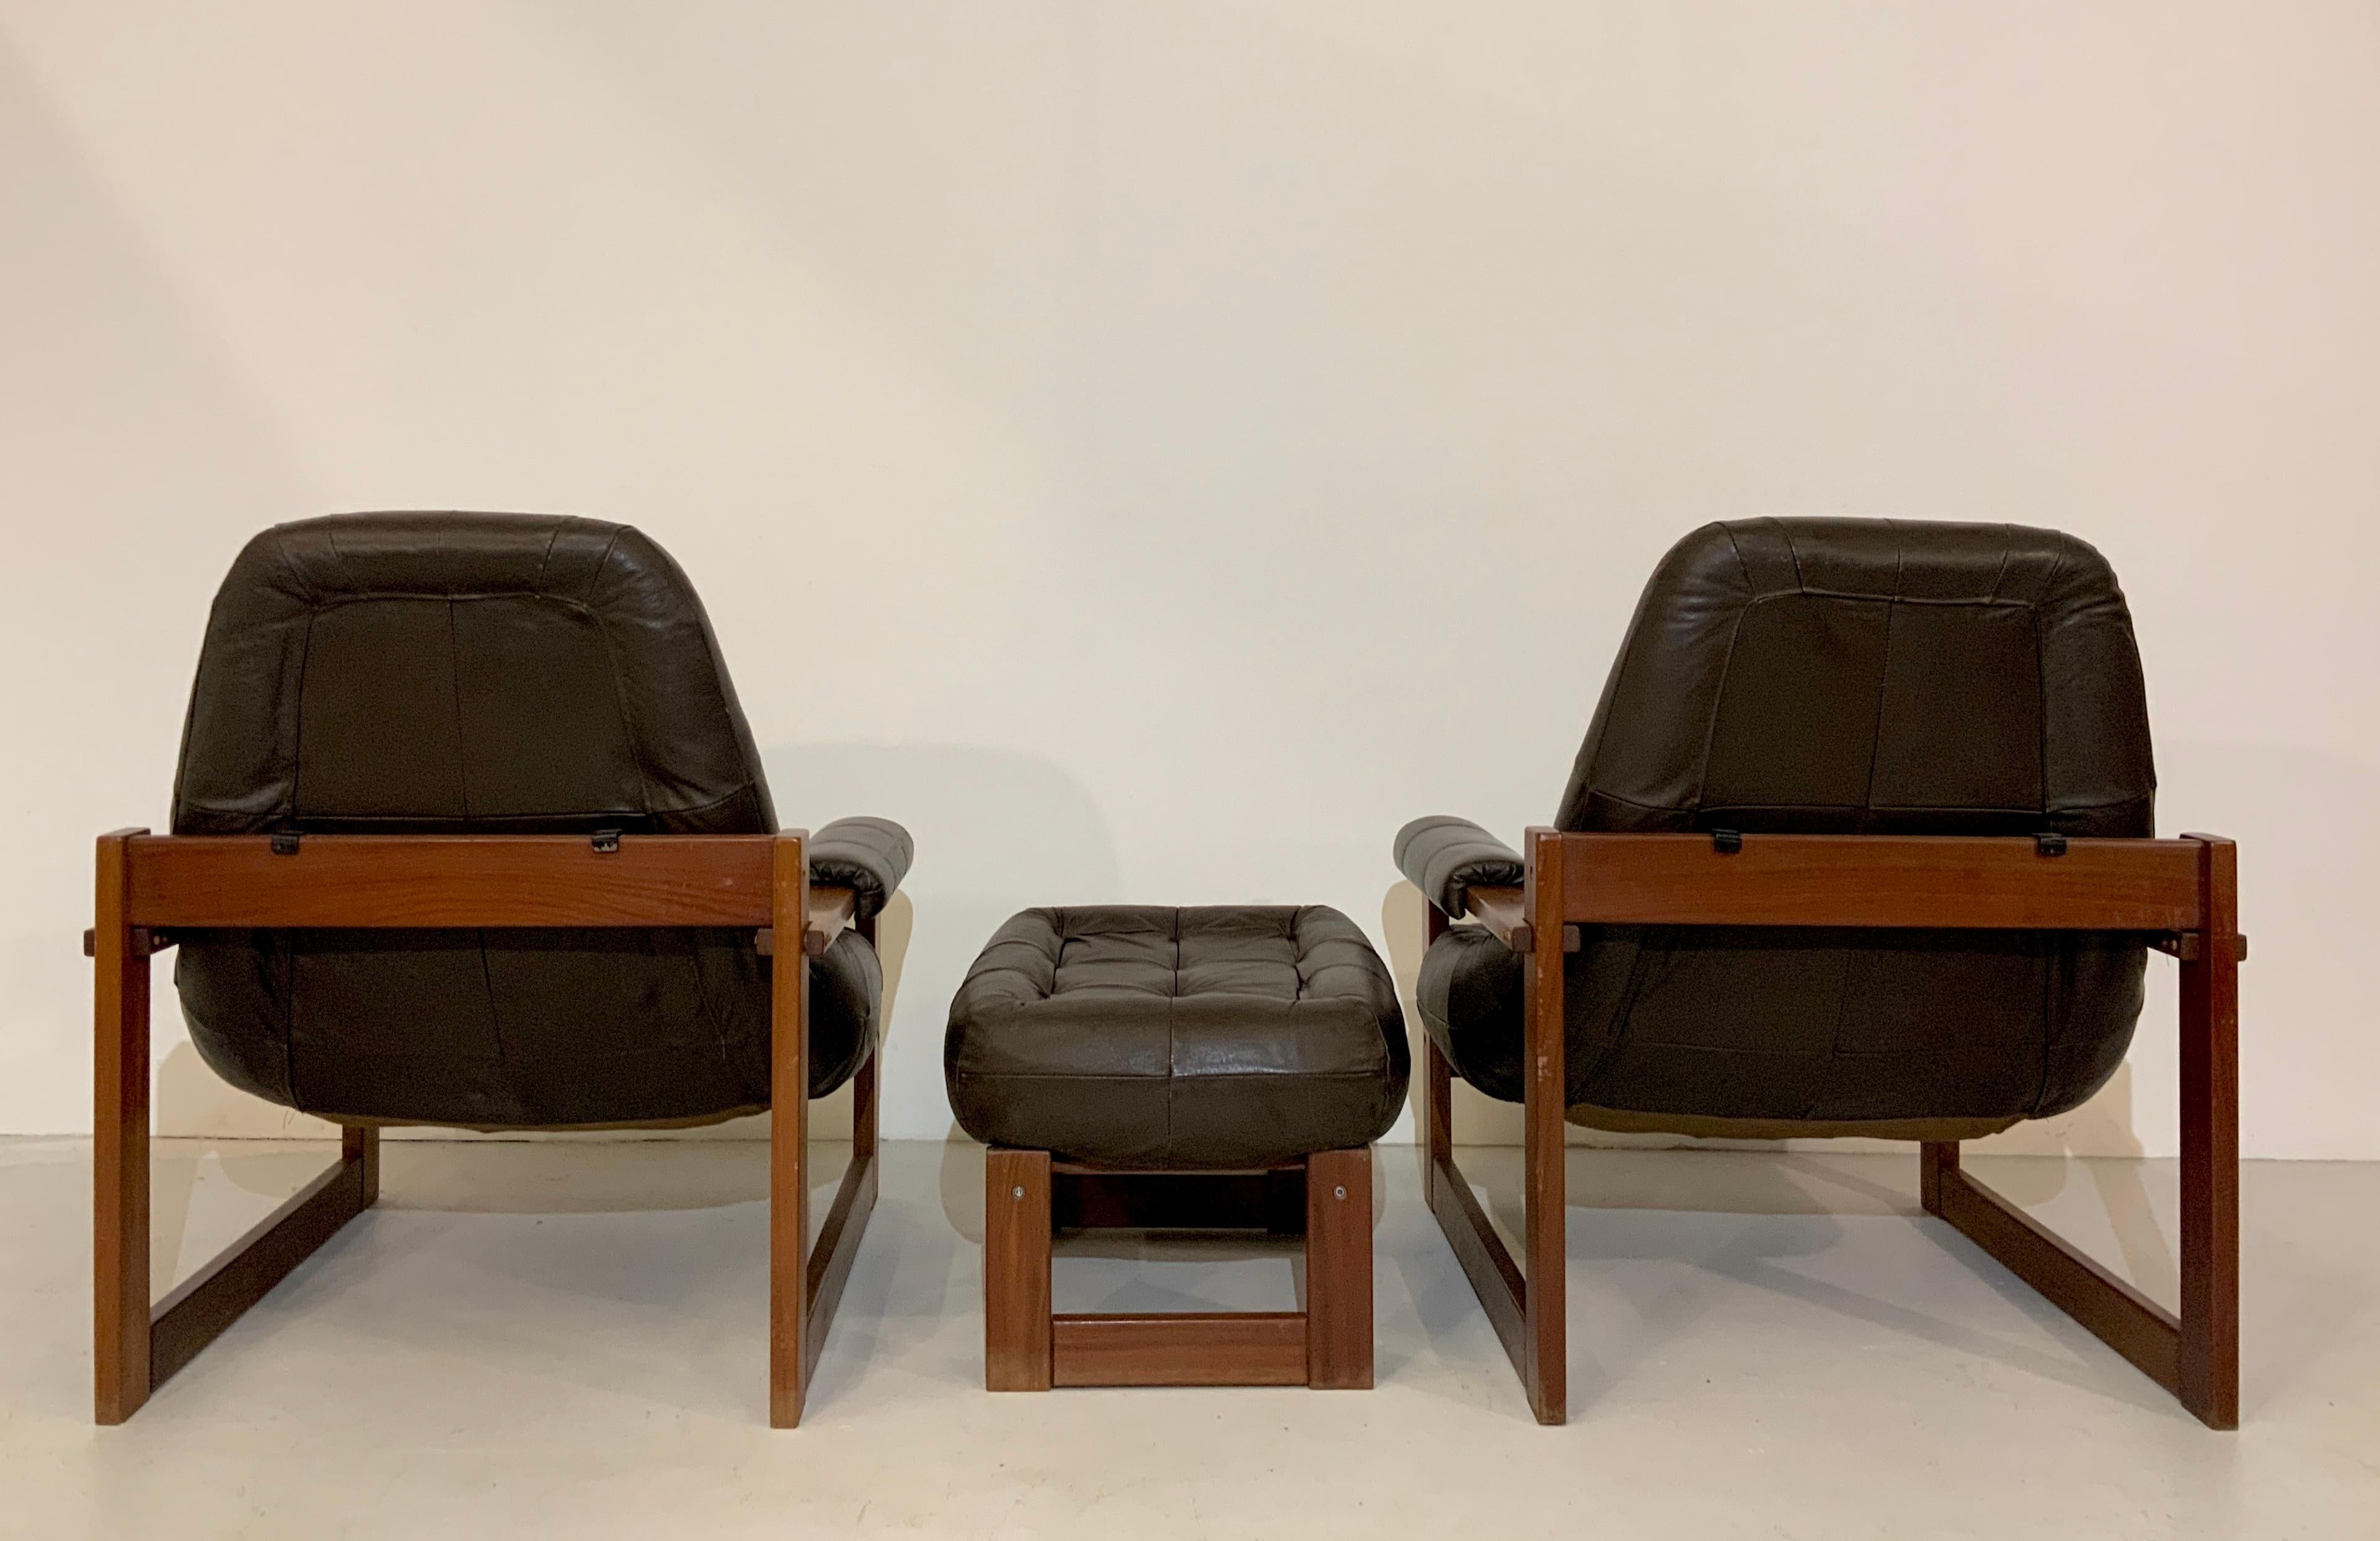 Percival Lafer Brazilian Mid-Century Modern Design Leather Living Room Set 1970s For Sale 6